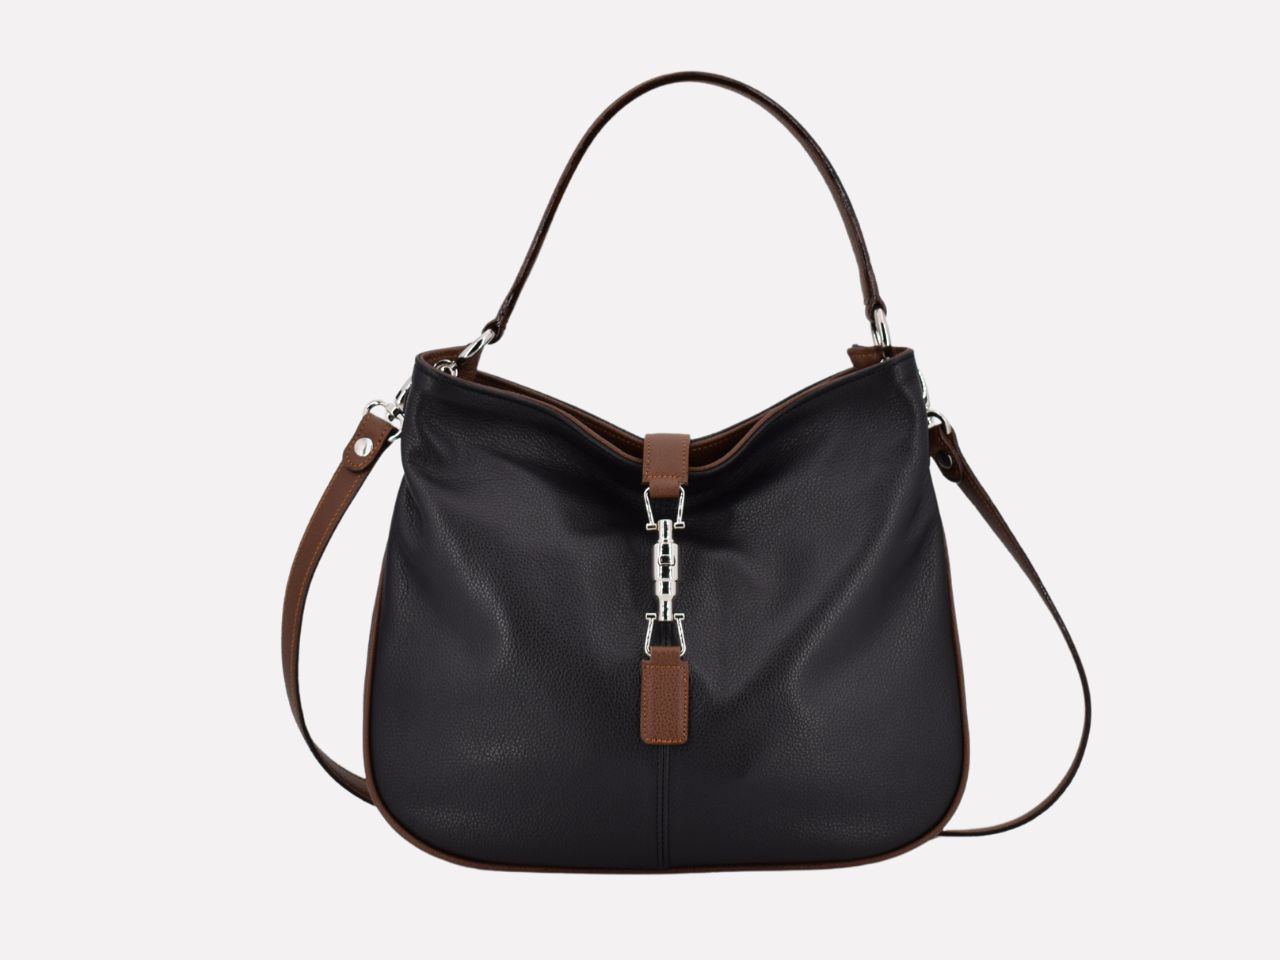 Alma, Italian leather handbag designed and handcrafted by Riccardo Mancini